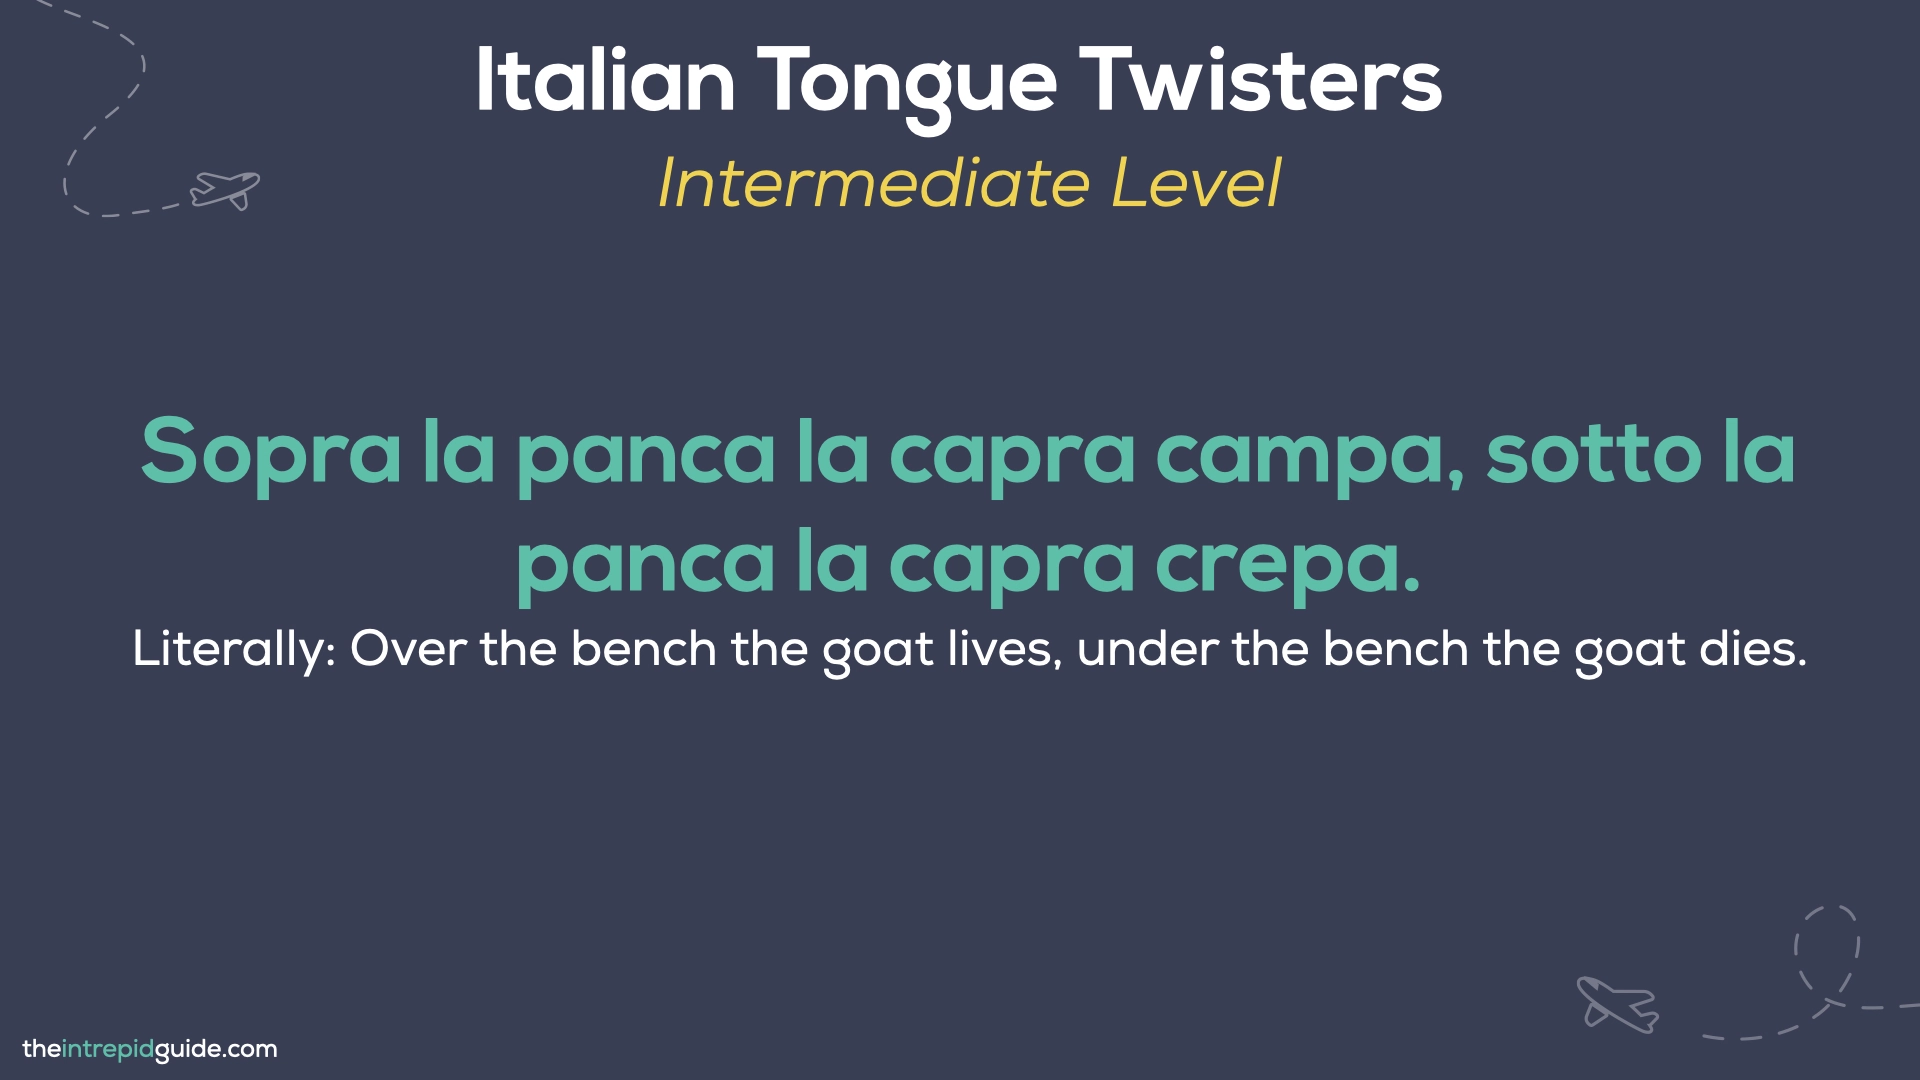 Italian Tongue Twisters - Sopra la panca la capra campa, sotto la panca la capra crepa